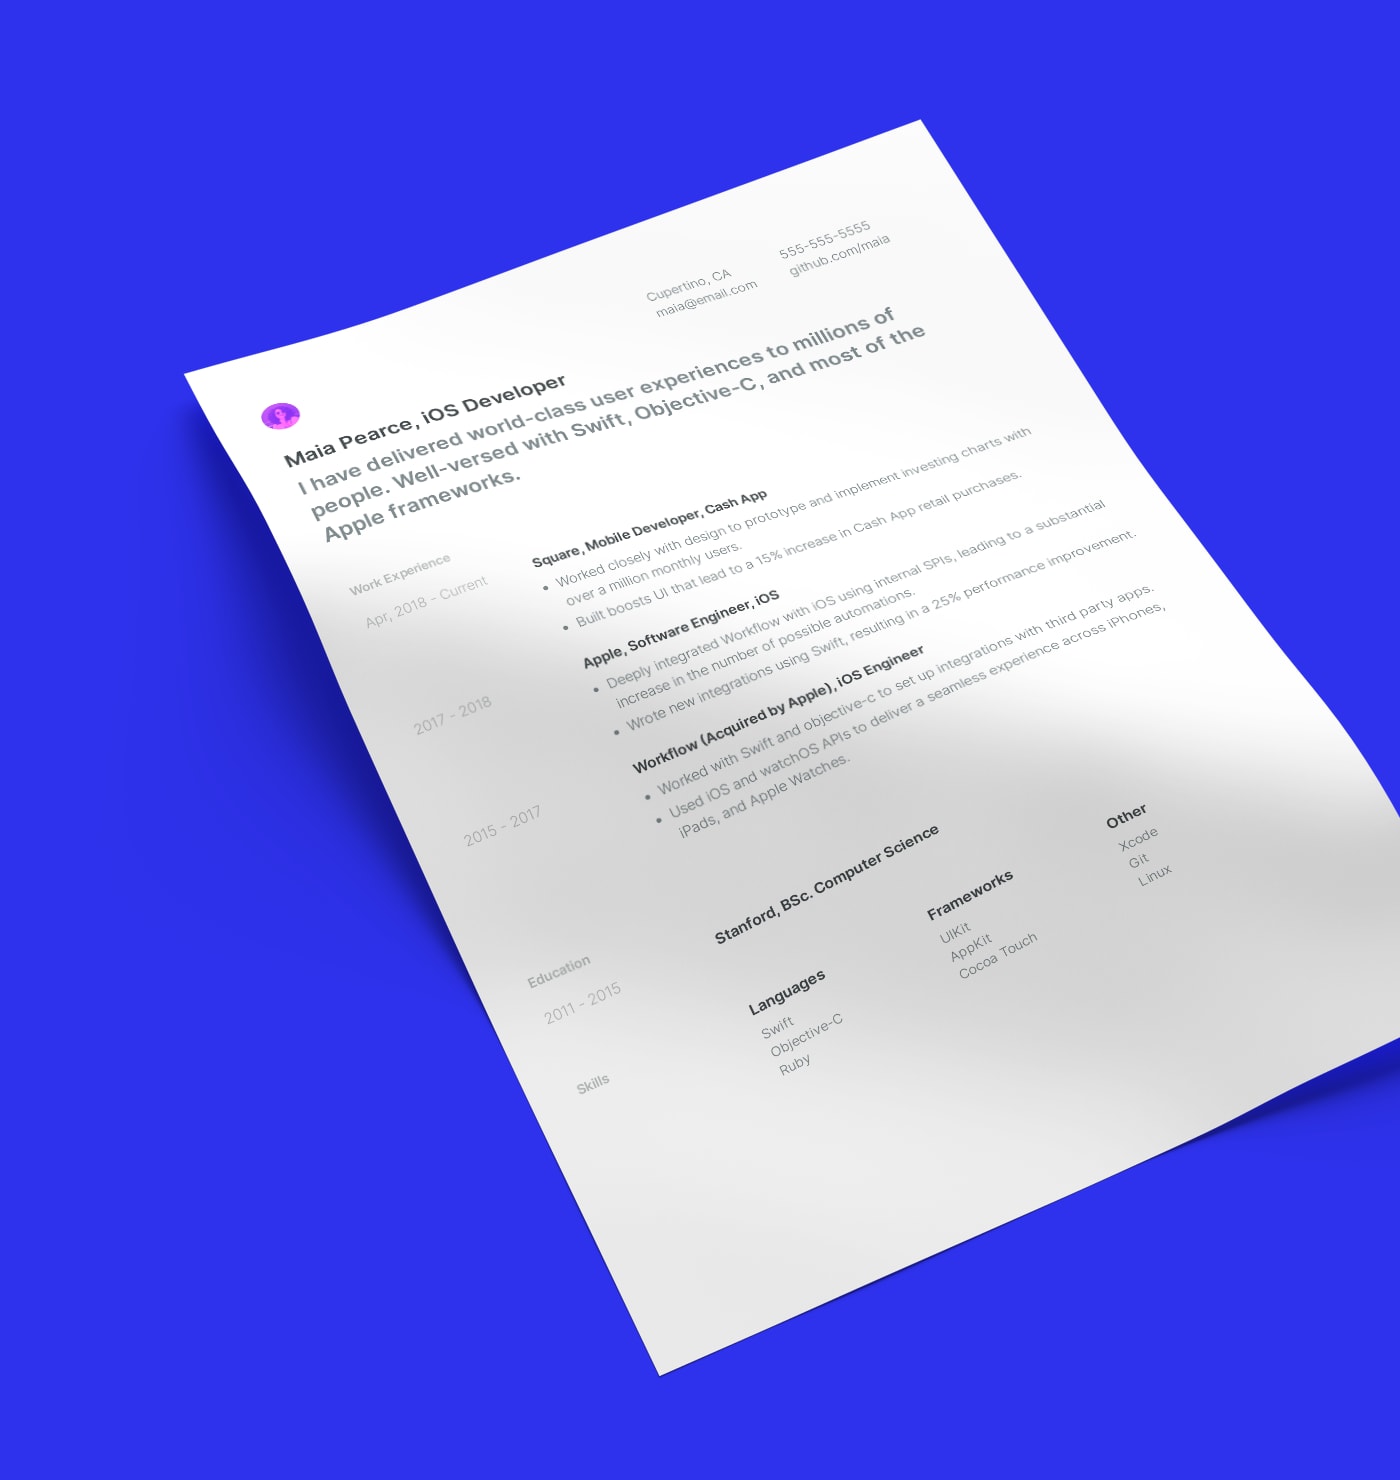 Pender simple resume template built with Standard Resume builder.